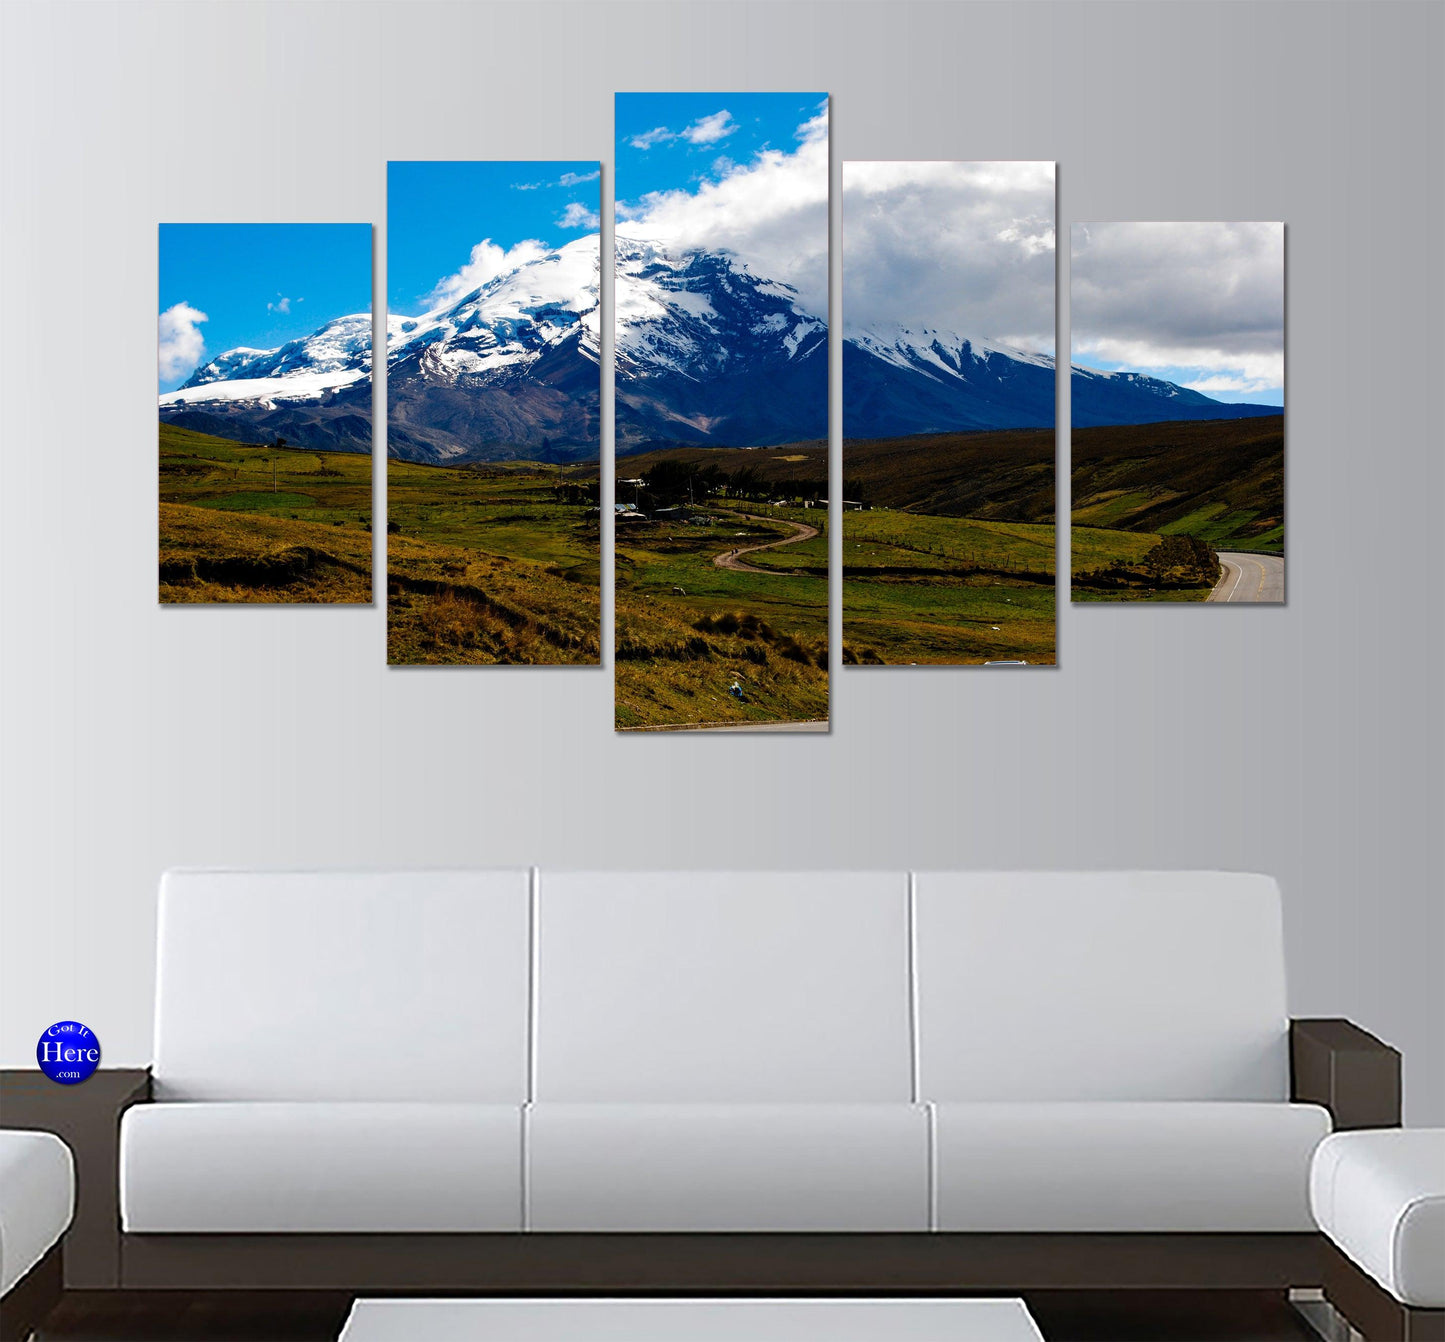 Chimborazo Volcano Ecuador 5 Panel Canvas Print Wall Art - GotItHere.com